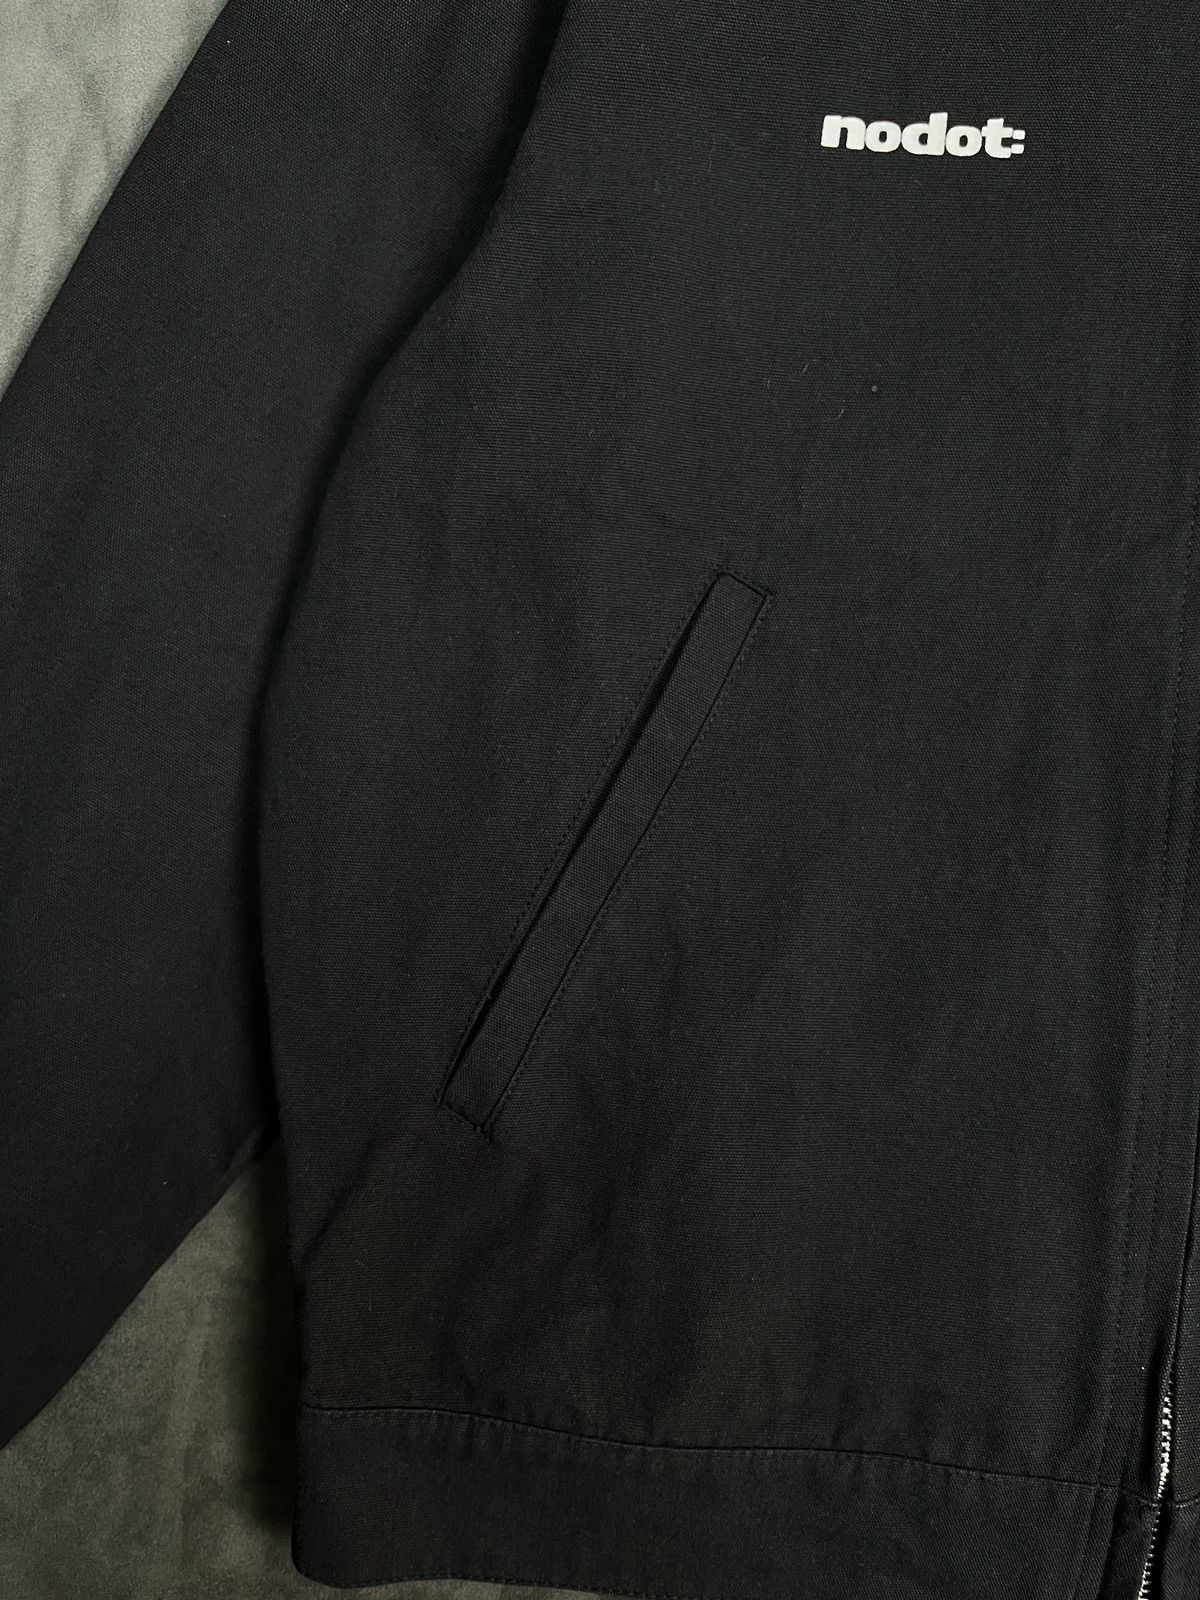 Hype - Nodot Y2k Two Way Zipper Black Workwear Jacket Medium - 5